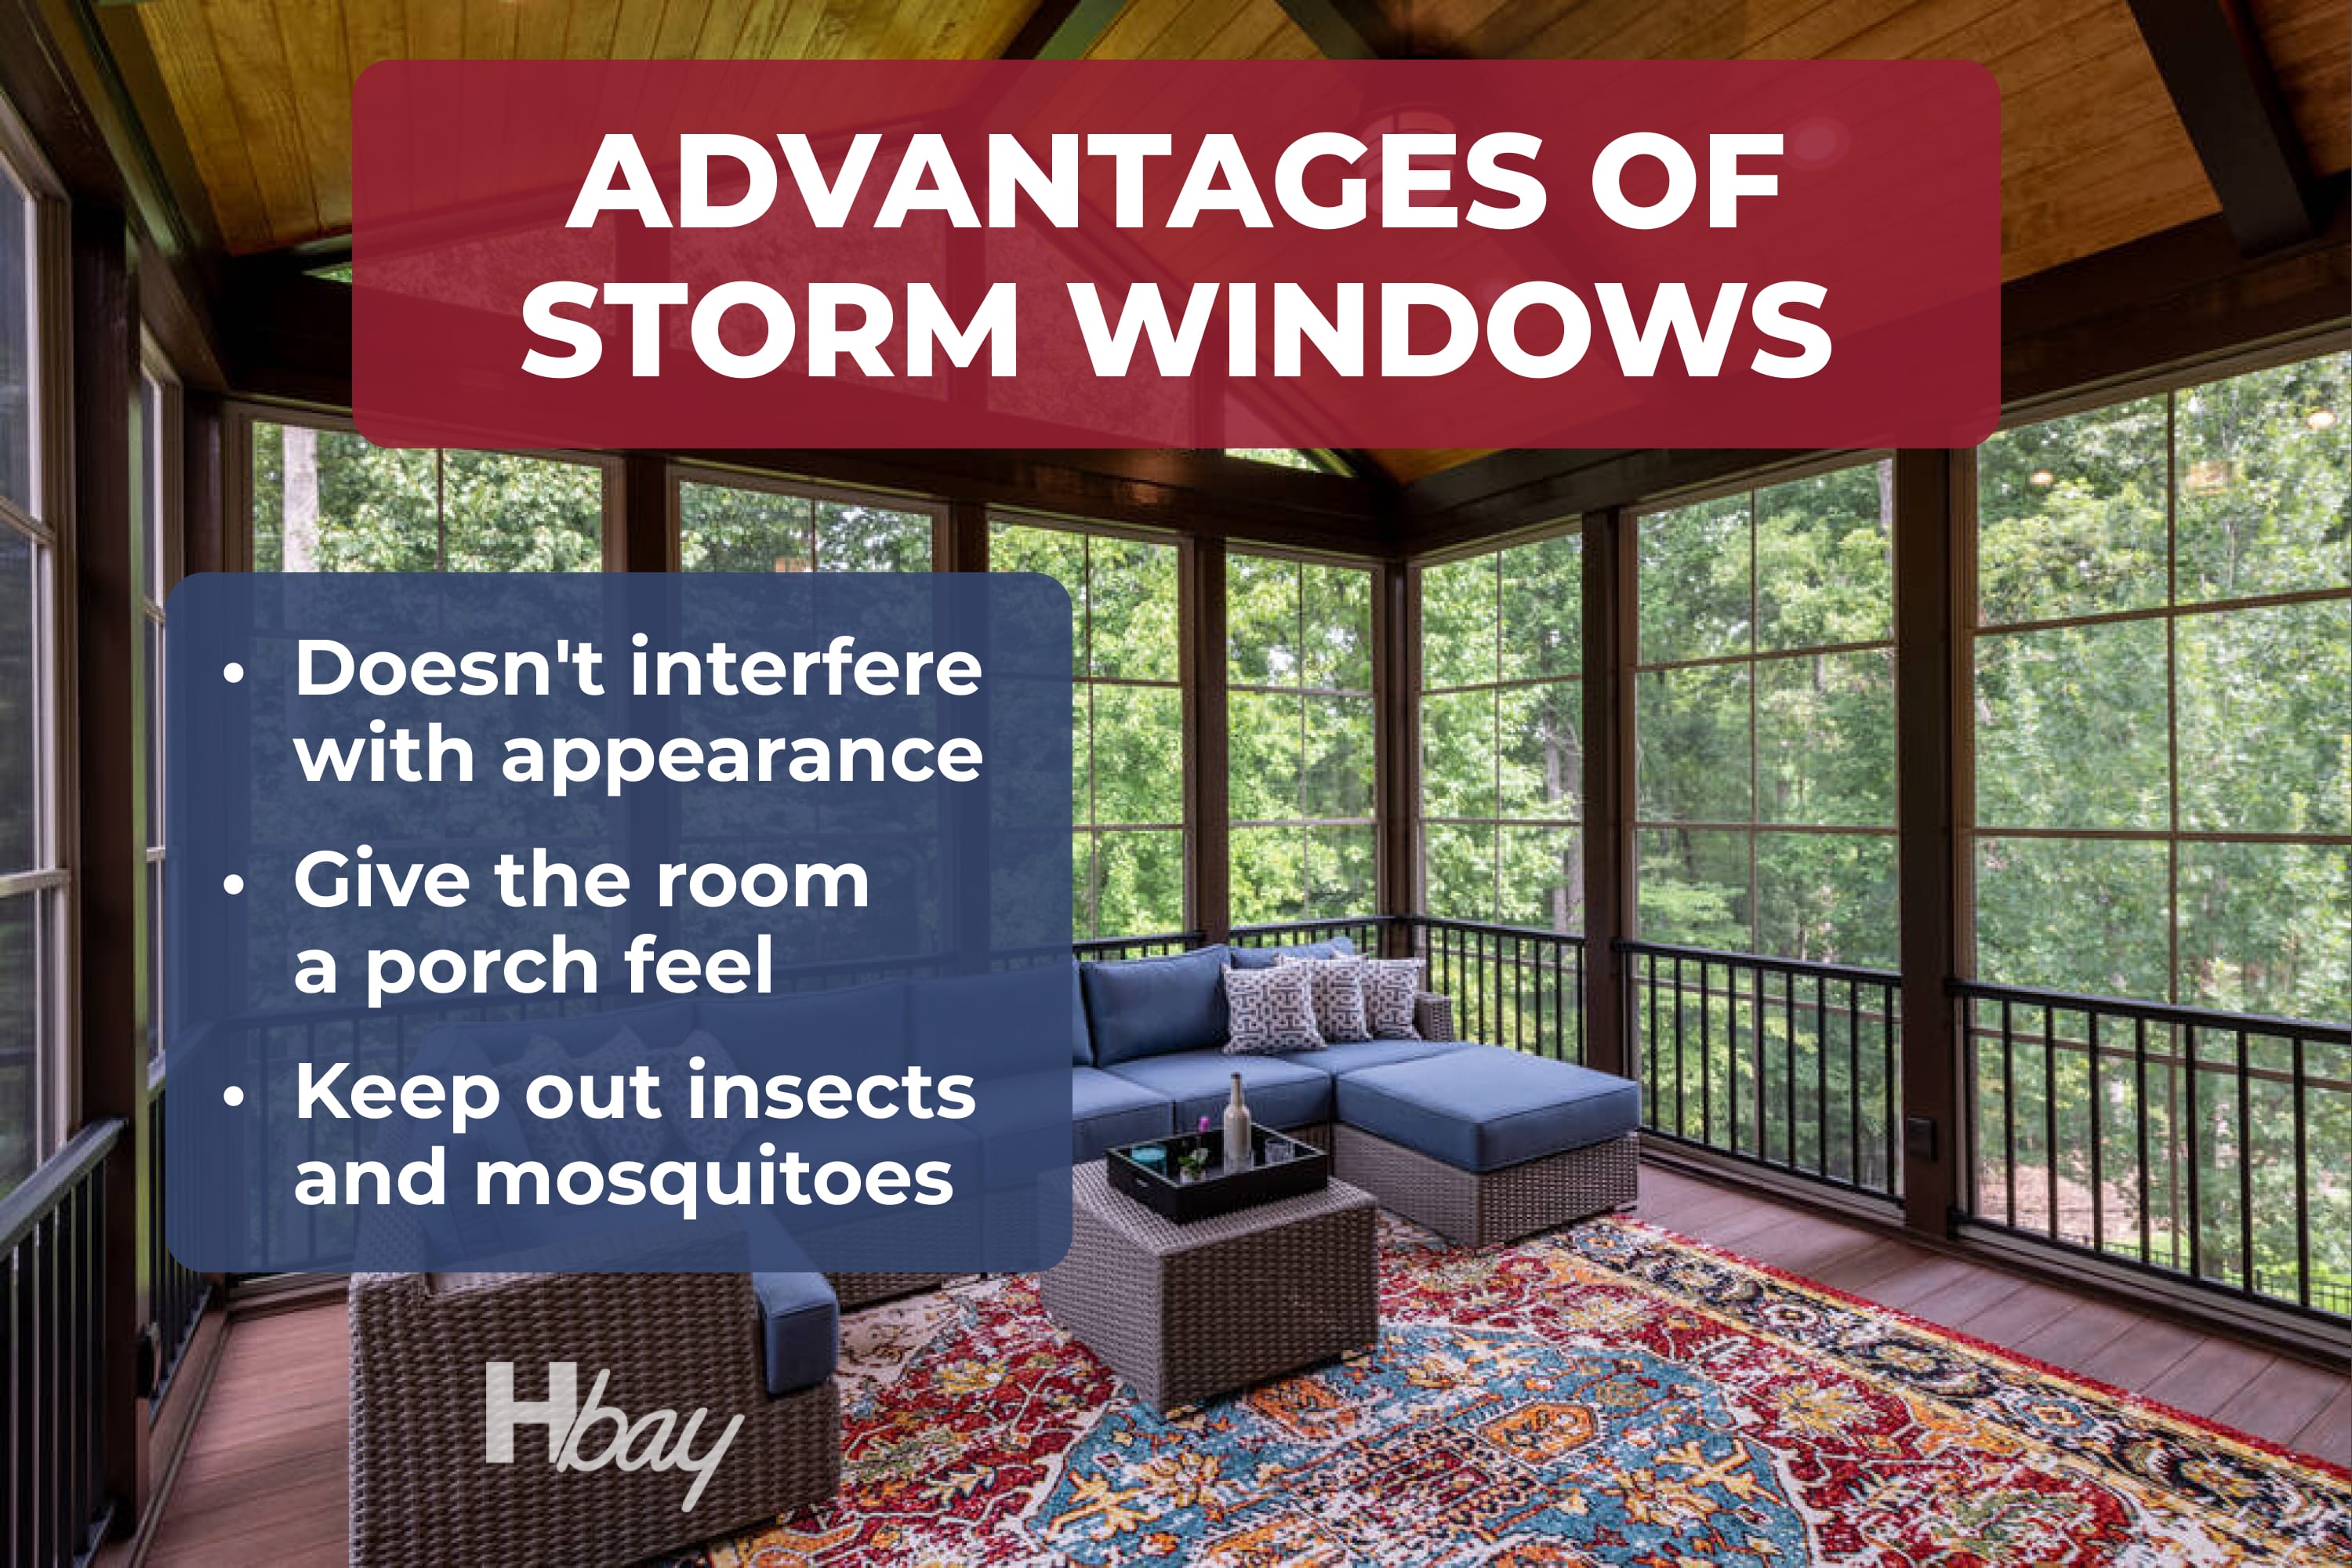 Advantages of storm windows